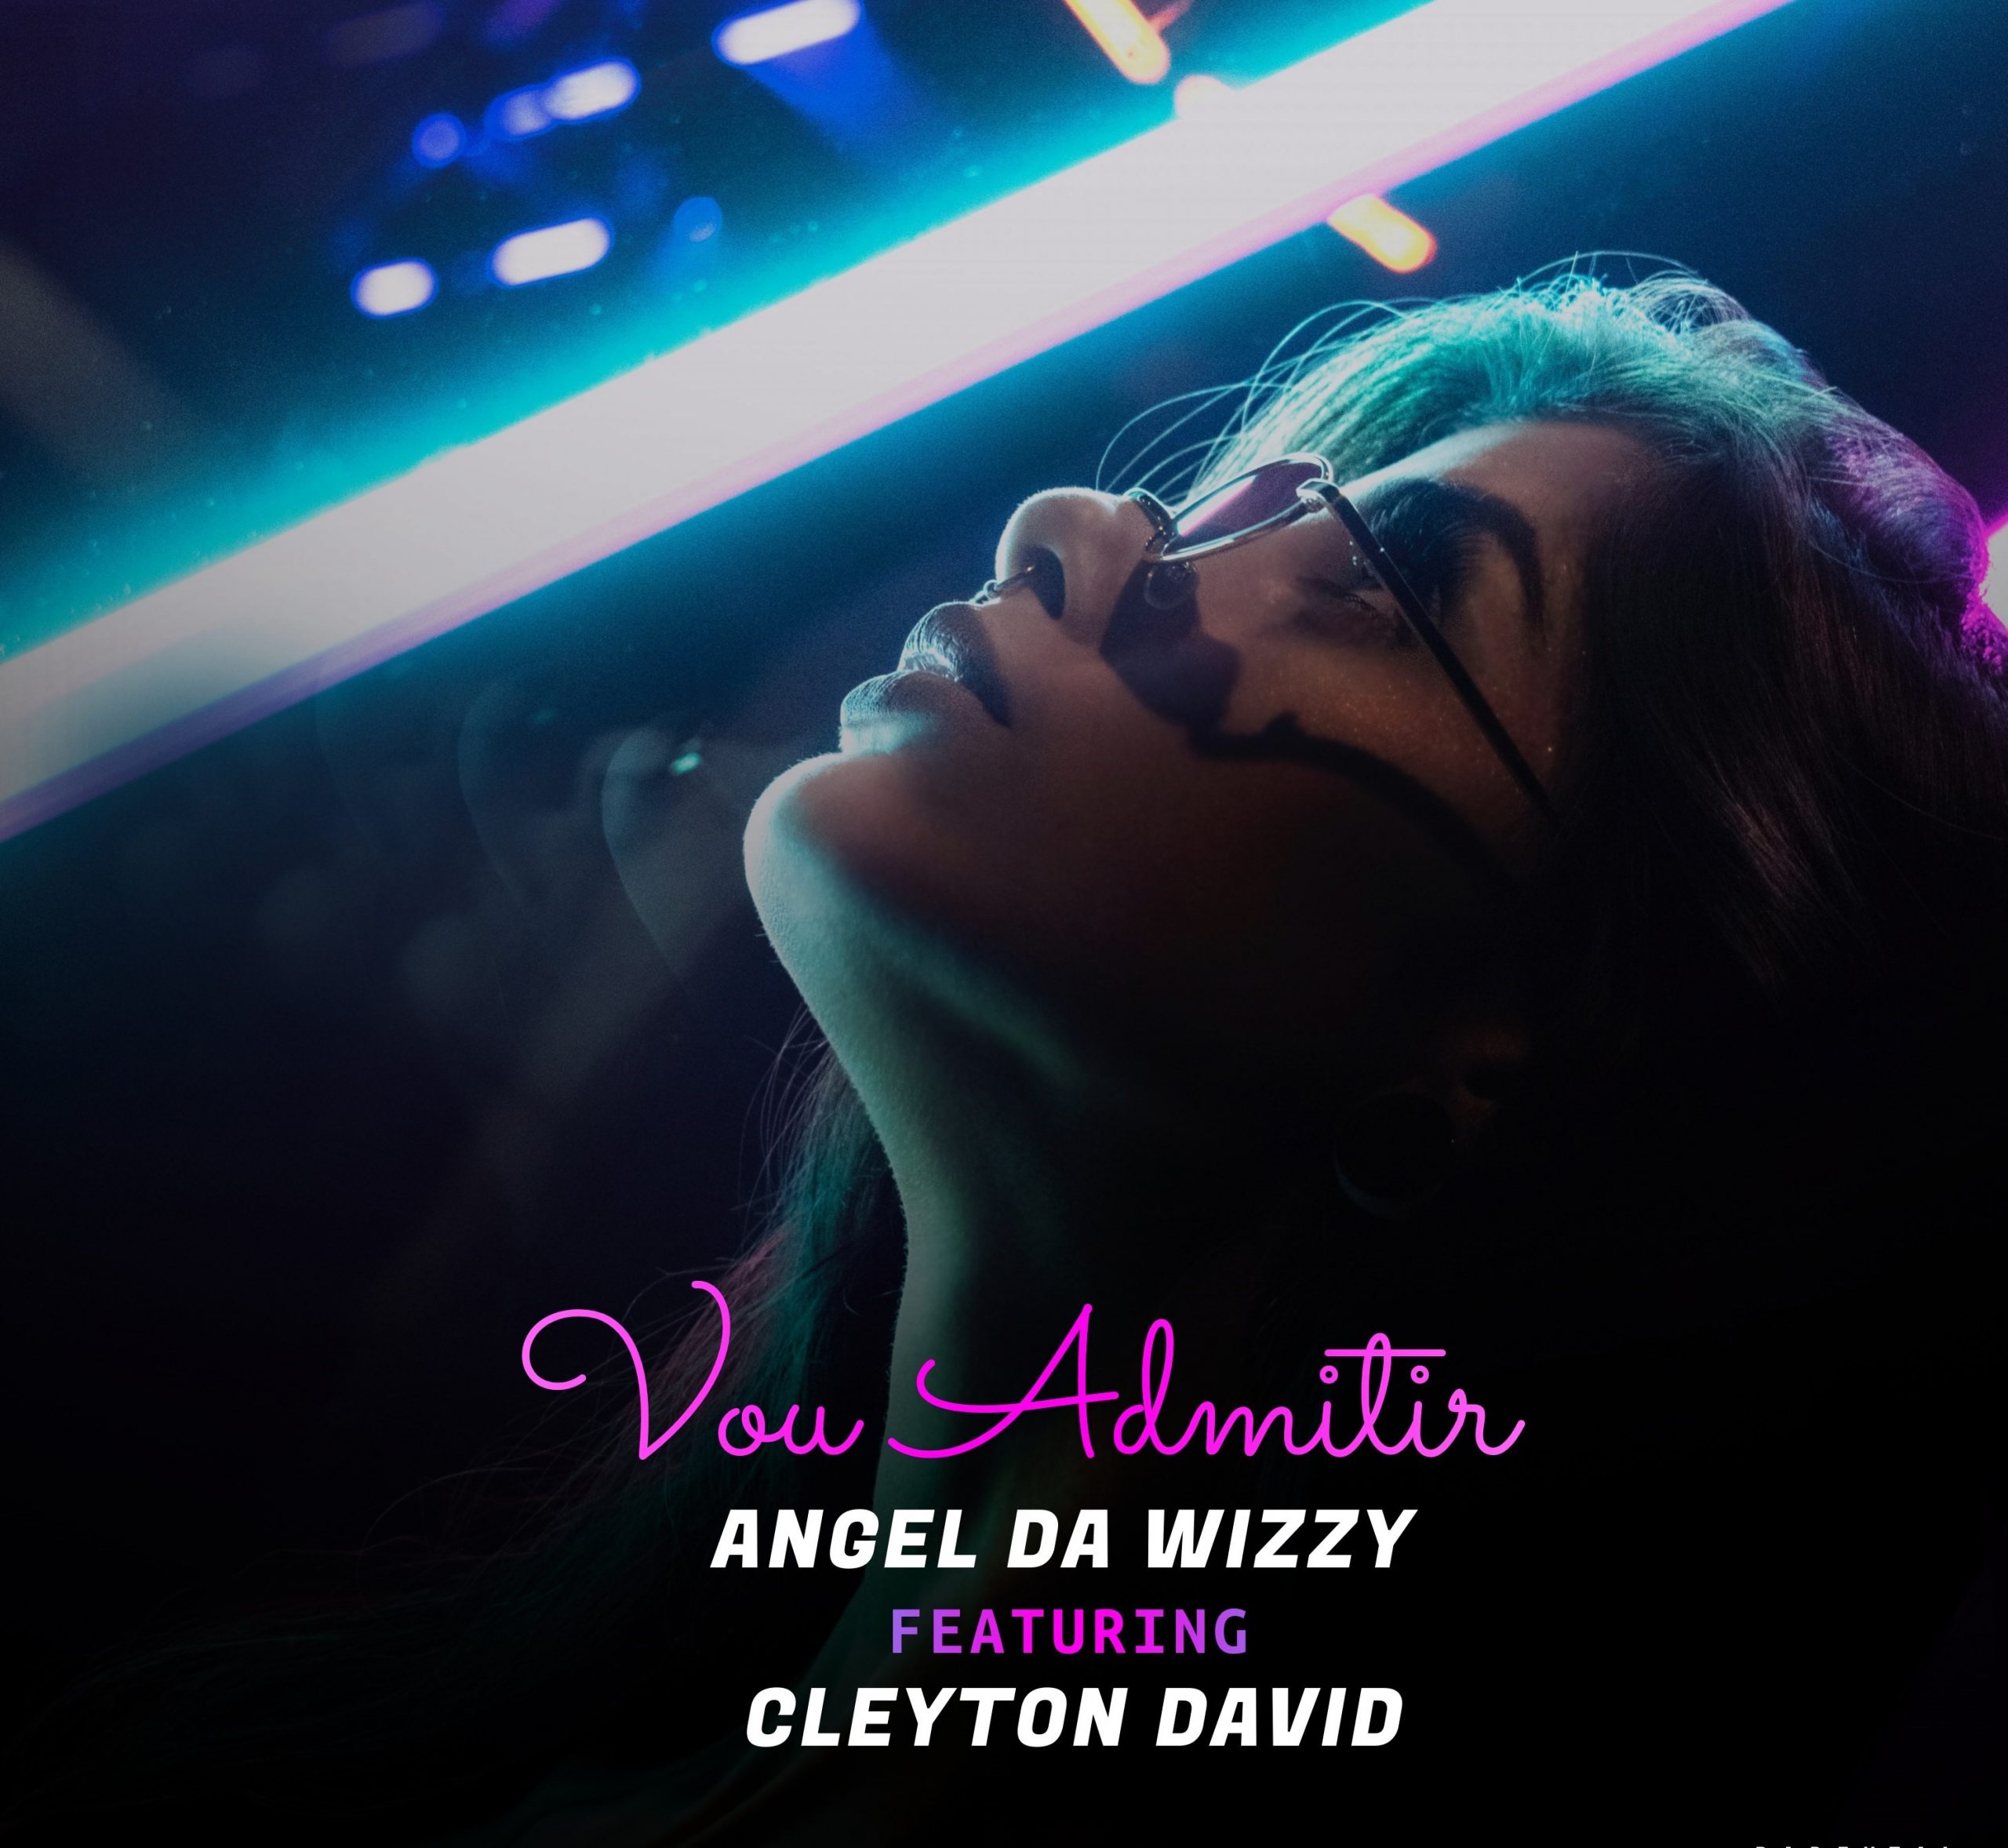 Angel da Wizzy – Vou Admitir  feat. Cleyton David